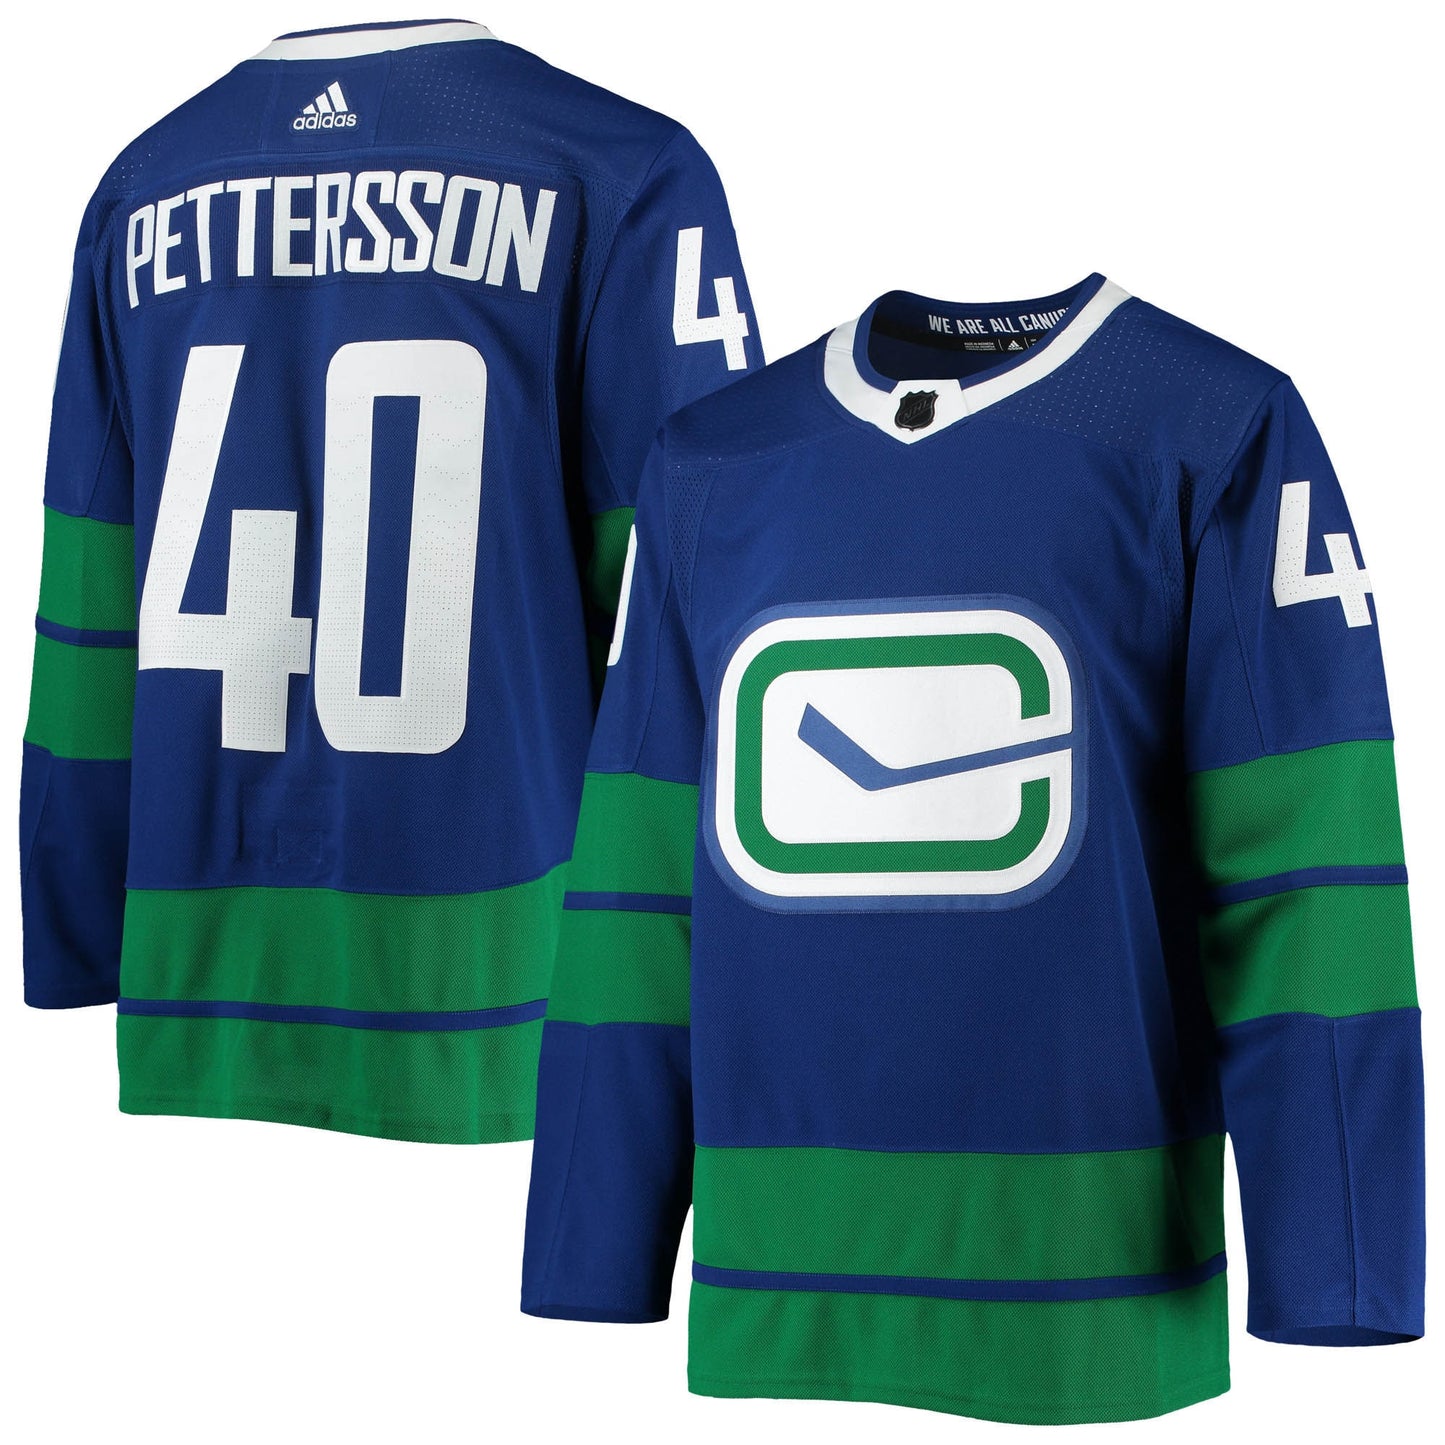 Elias Pettersson Vancouver Canucks adidas 2020/21 Authentic Alternate Player Jersey - Blue